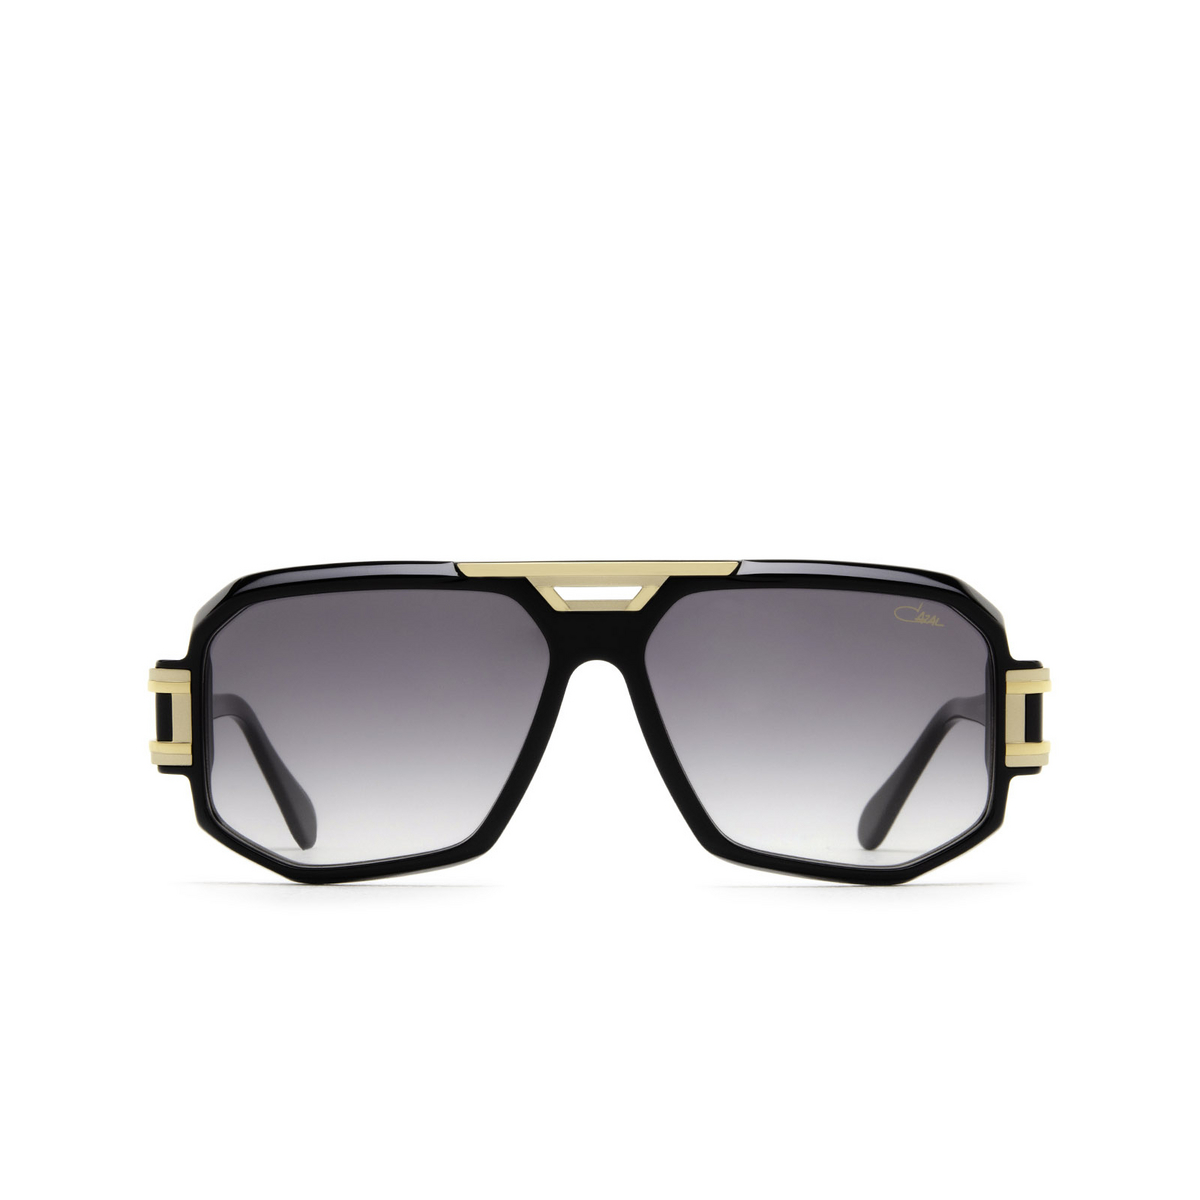 Cazal 675 Sunglasses 001 Black - Gold - front view